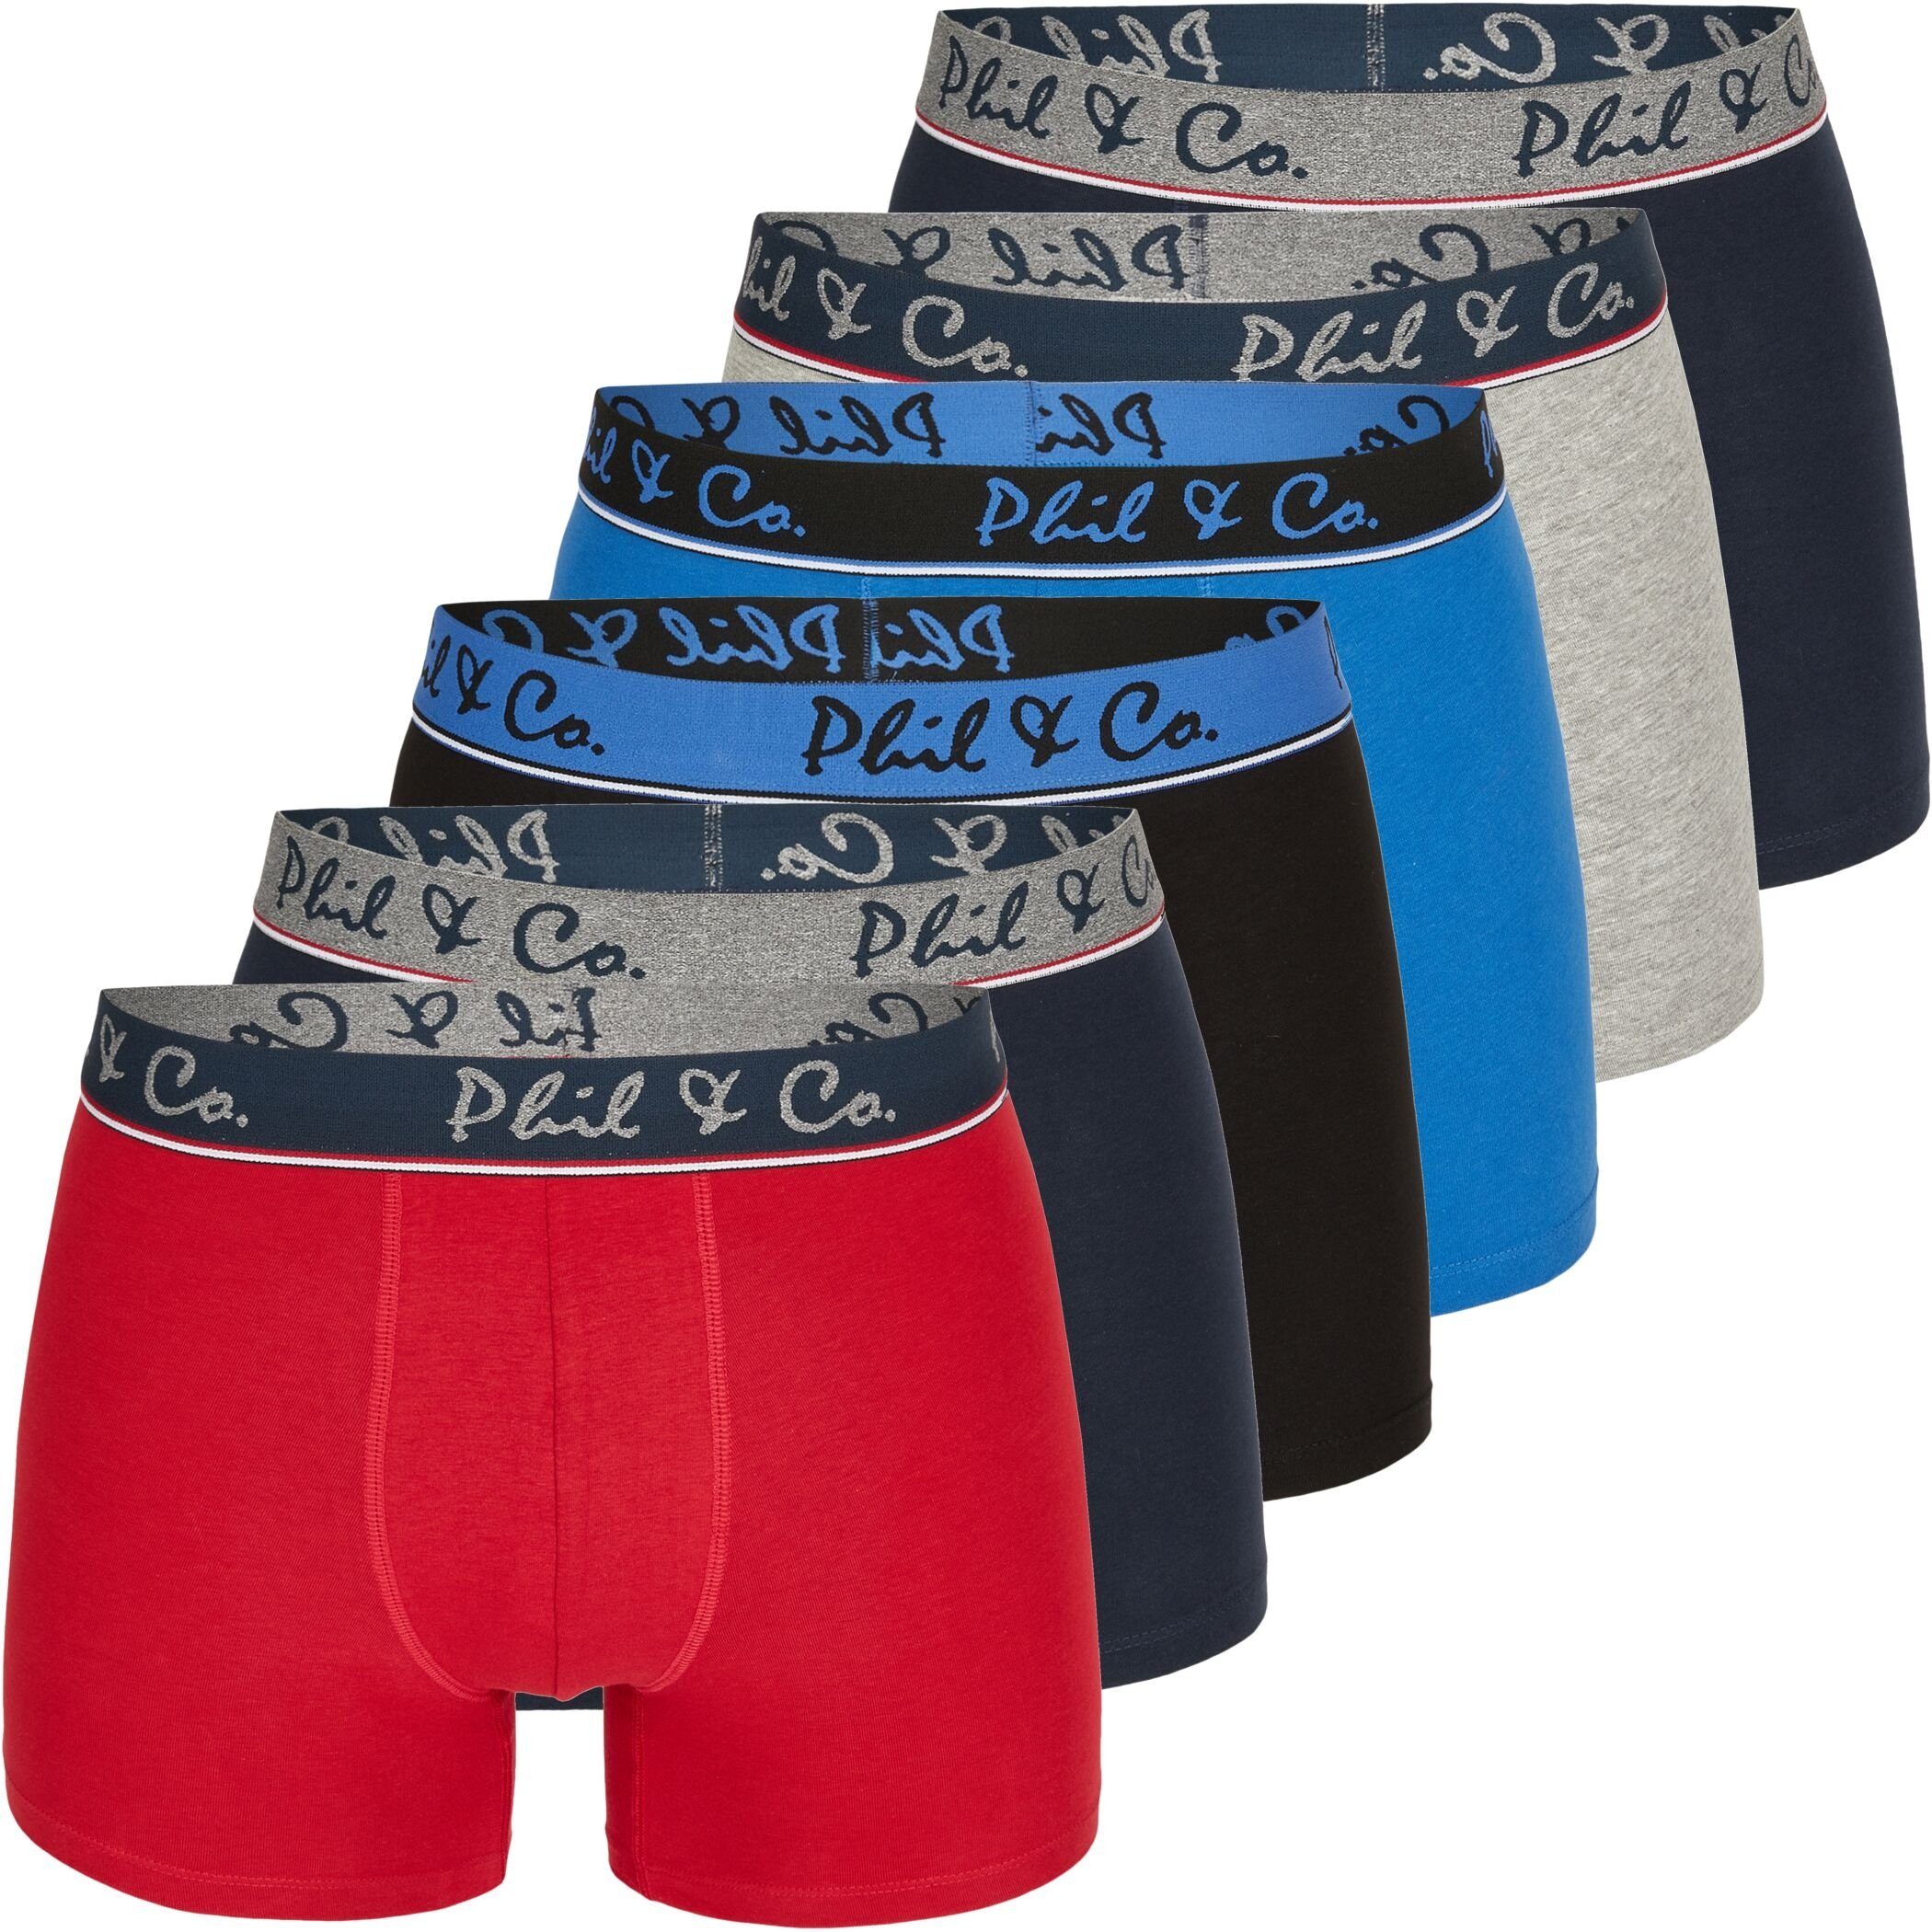 Phil & Co. Boxershorts 6er Pack Phil & Co Berlin Jersey Boxershorts Trunk Short Pant FARBWAHL (1-St) DESIGN 19